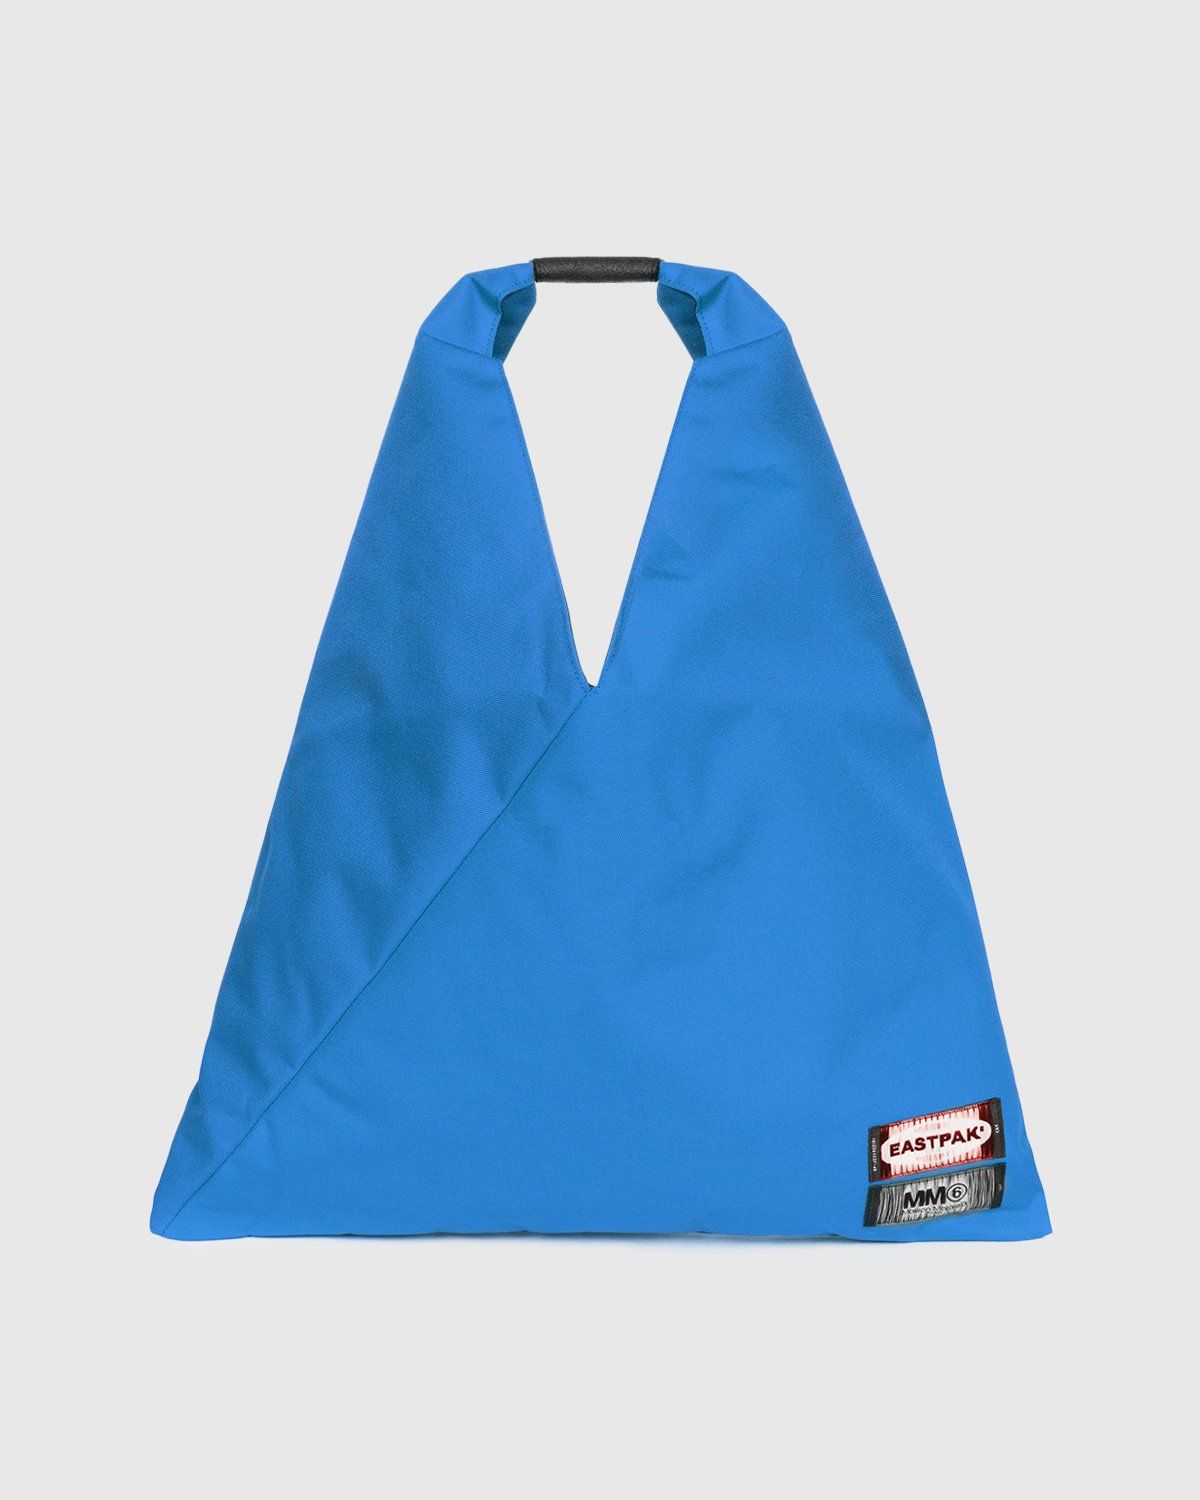 MM6 Maison Margiela x Eastpak – Shopping Bag Dazzling Blue - Bags - Blue - Image 1